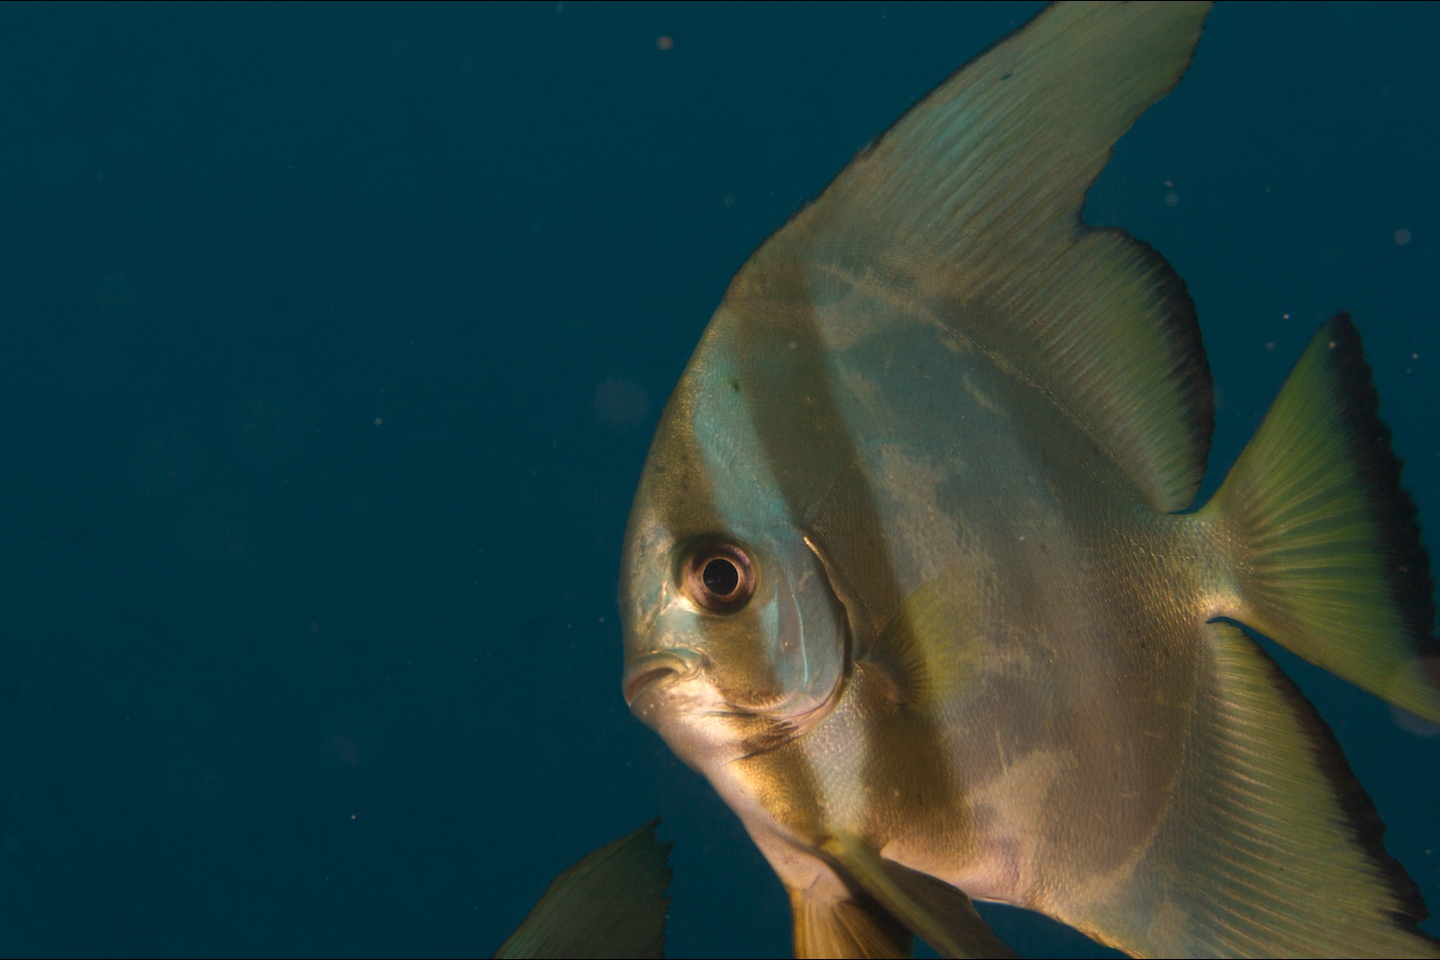 Golden spadefish